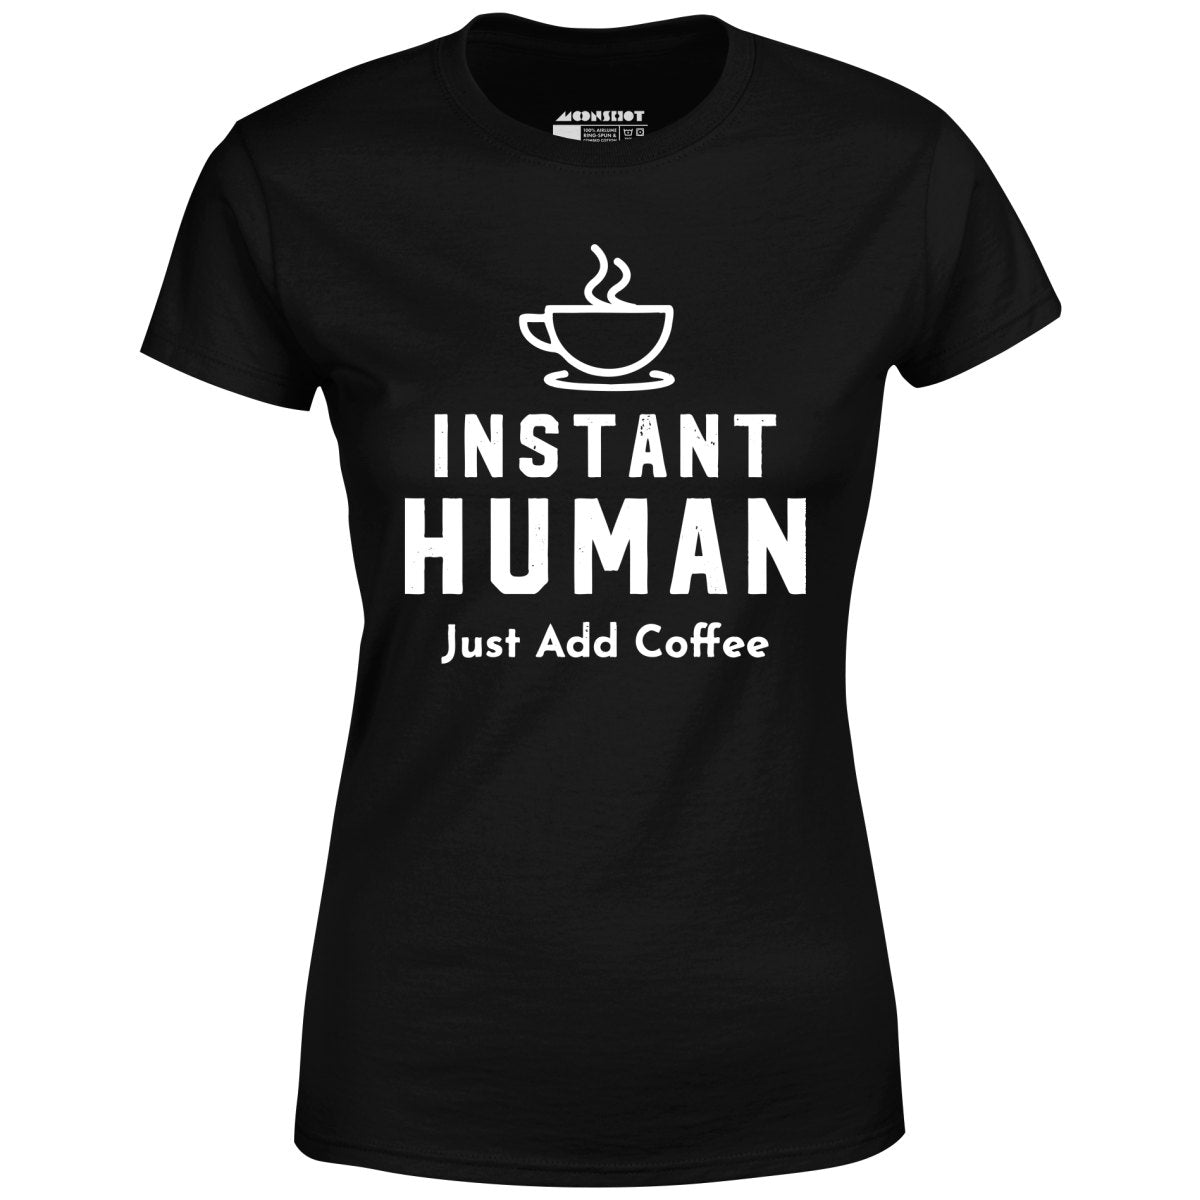 Instant Human Just Add Coffee - Women's T-Shirt